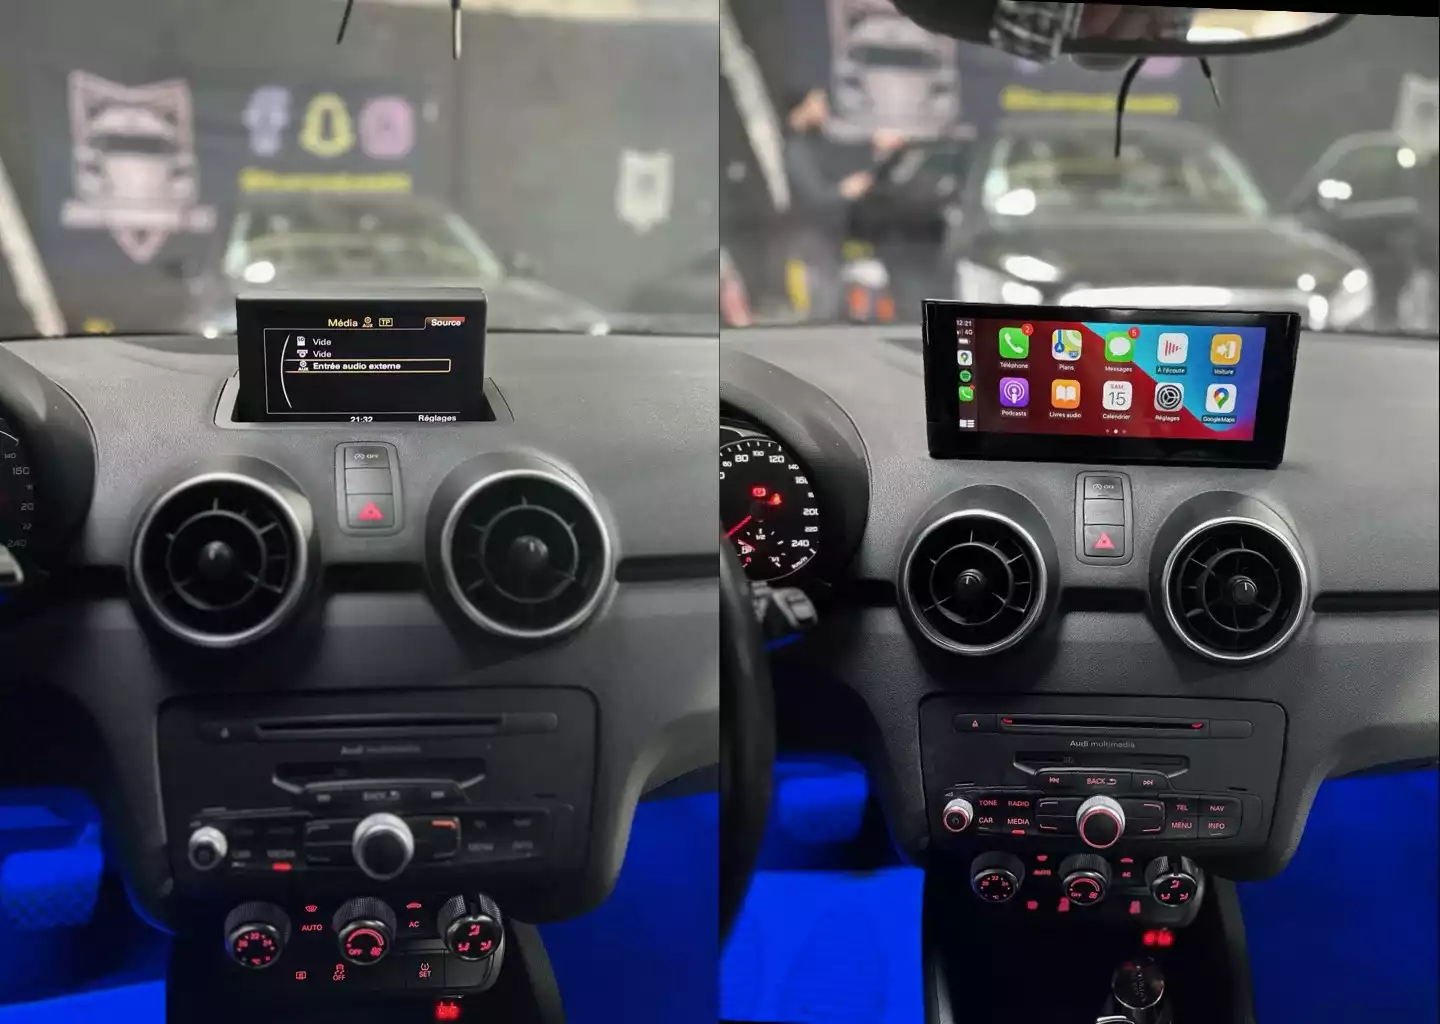 Autoradio Audi A5 B9 Android Auto Apple Carplay GPS Bluetooth Poste Radio  Ecran Tactile Compatible D'origine